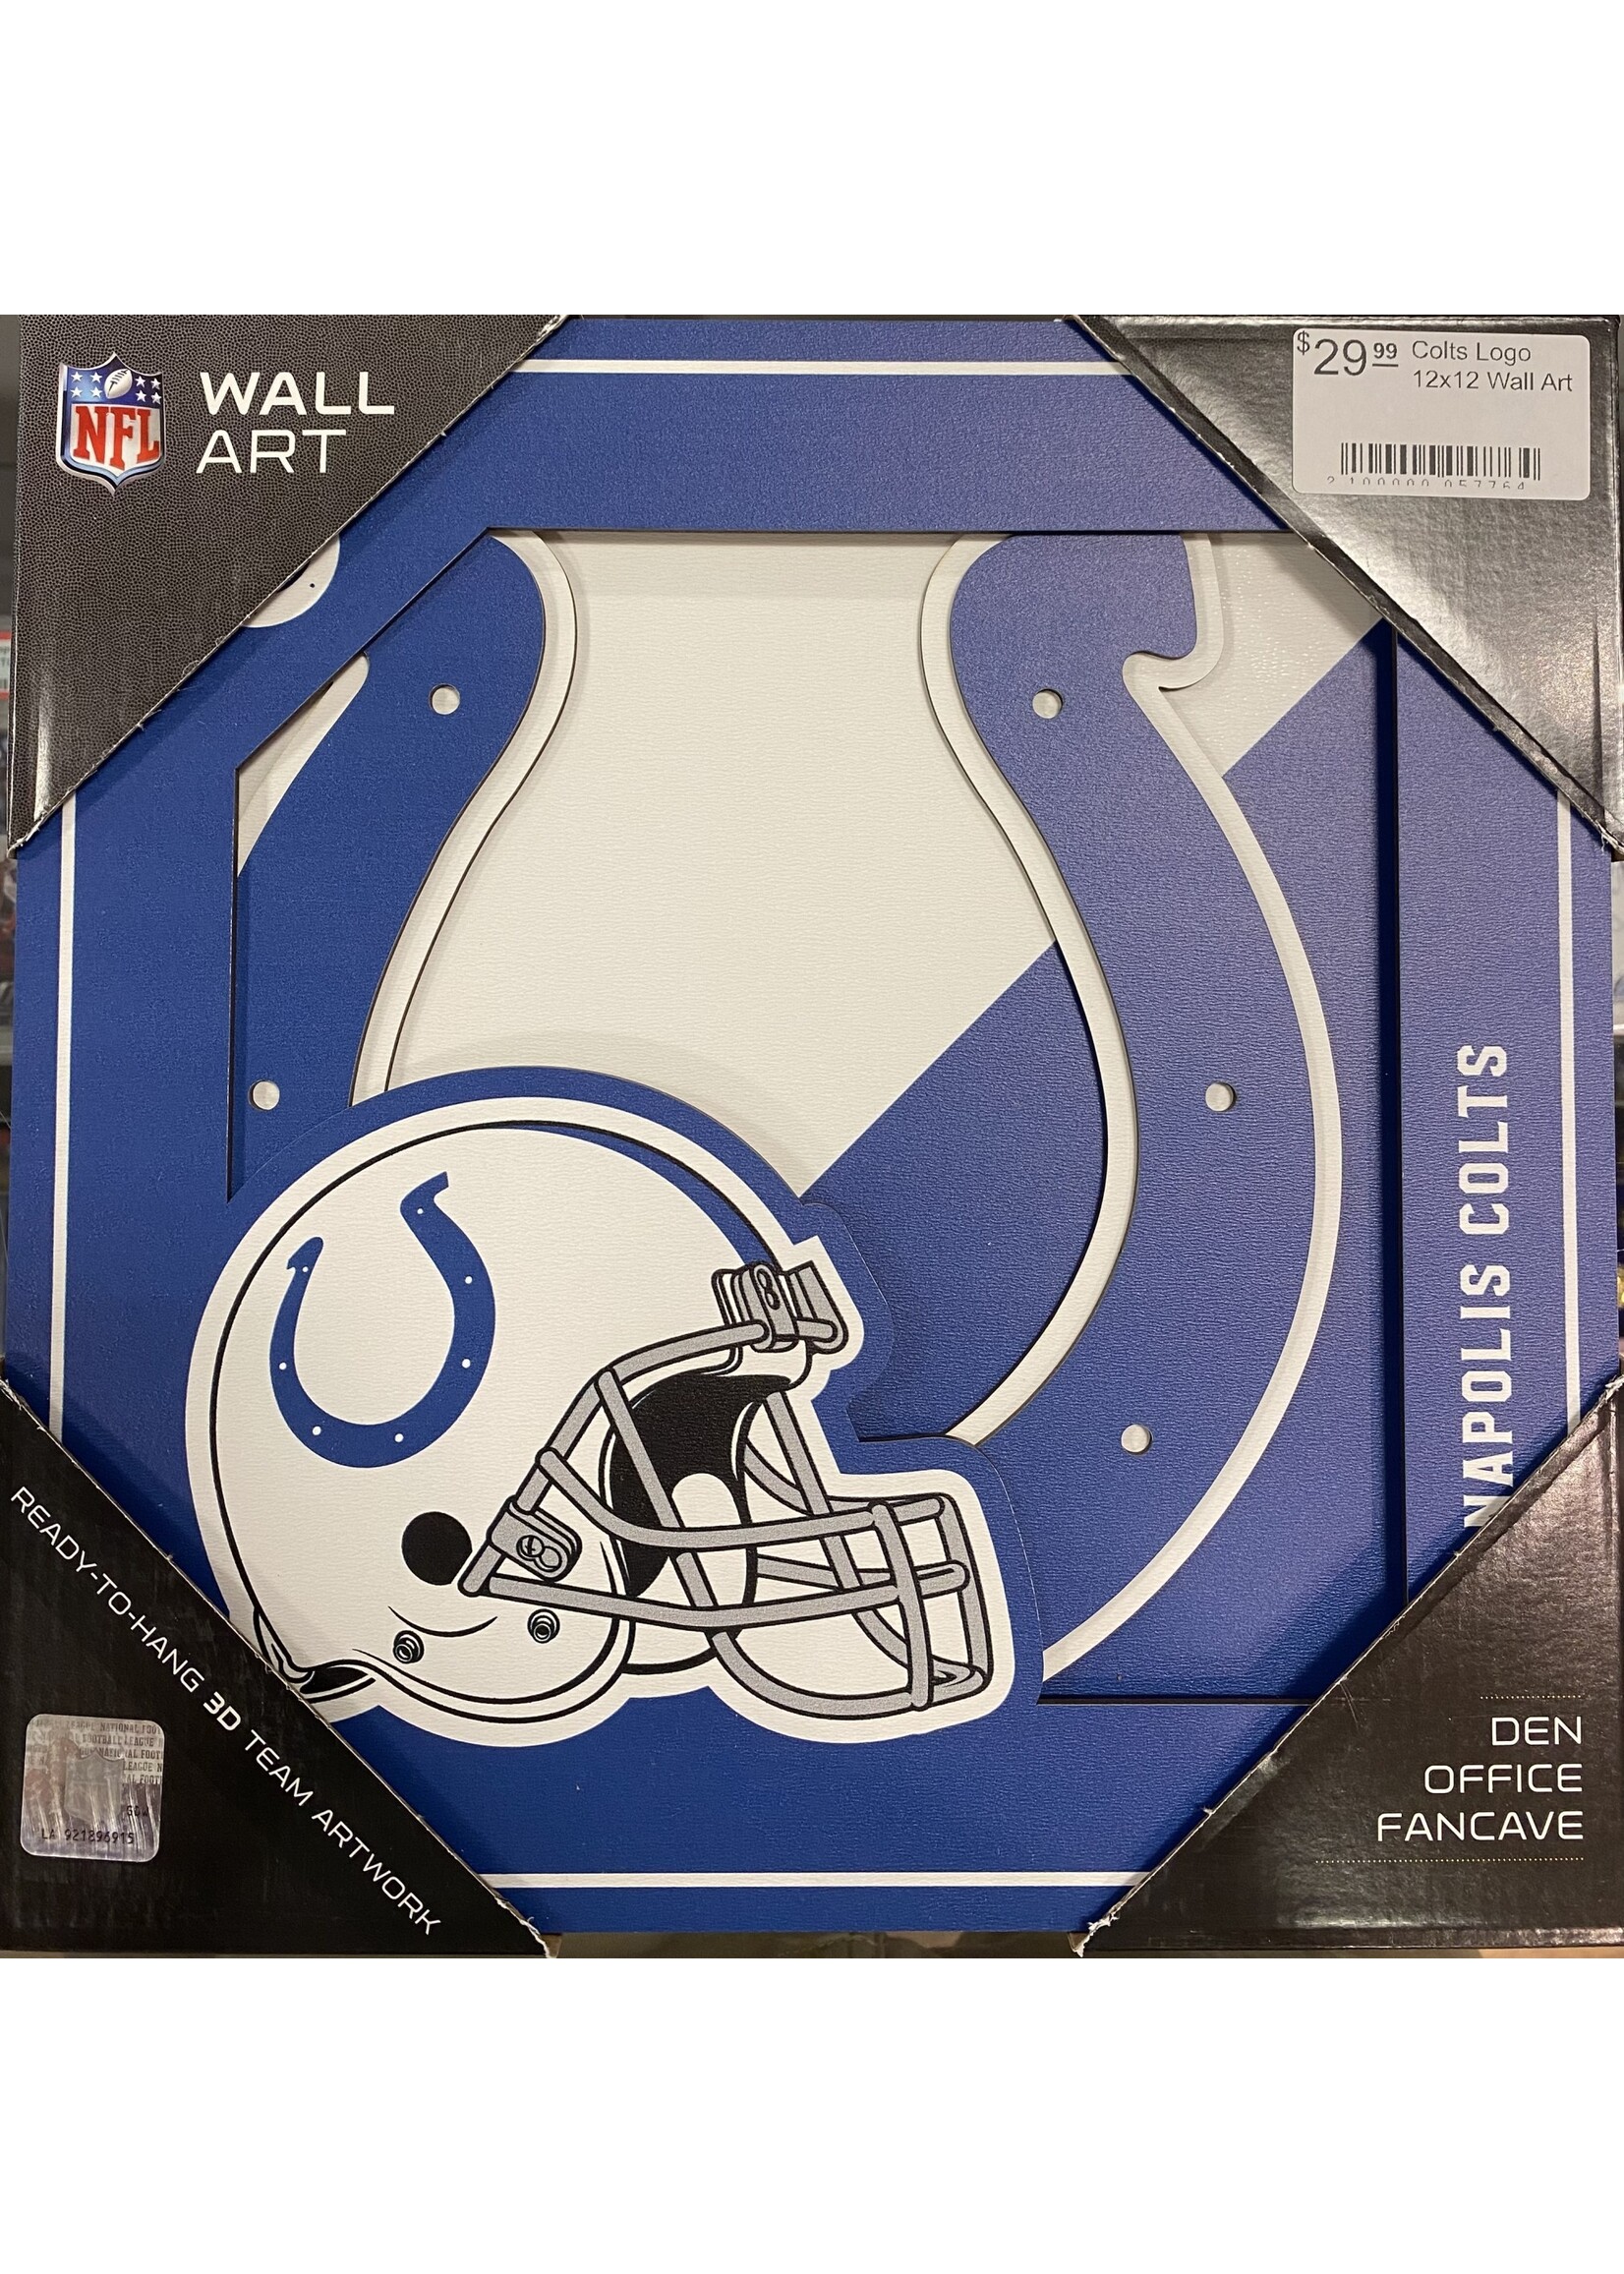 Colts Logo 12x12 Wall Art